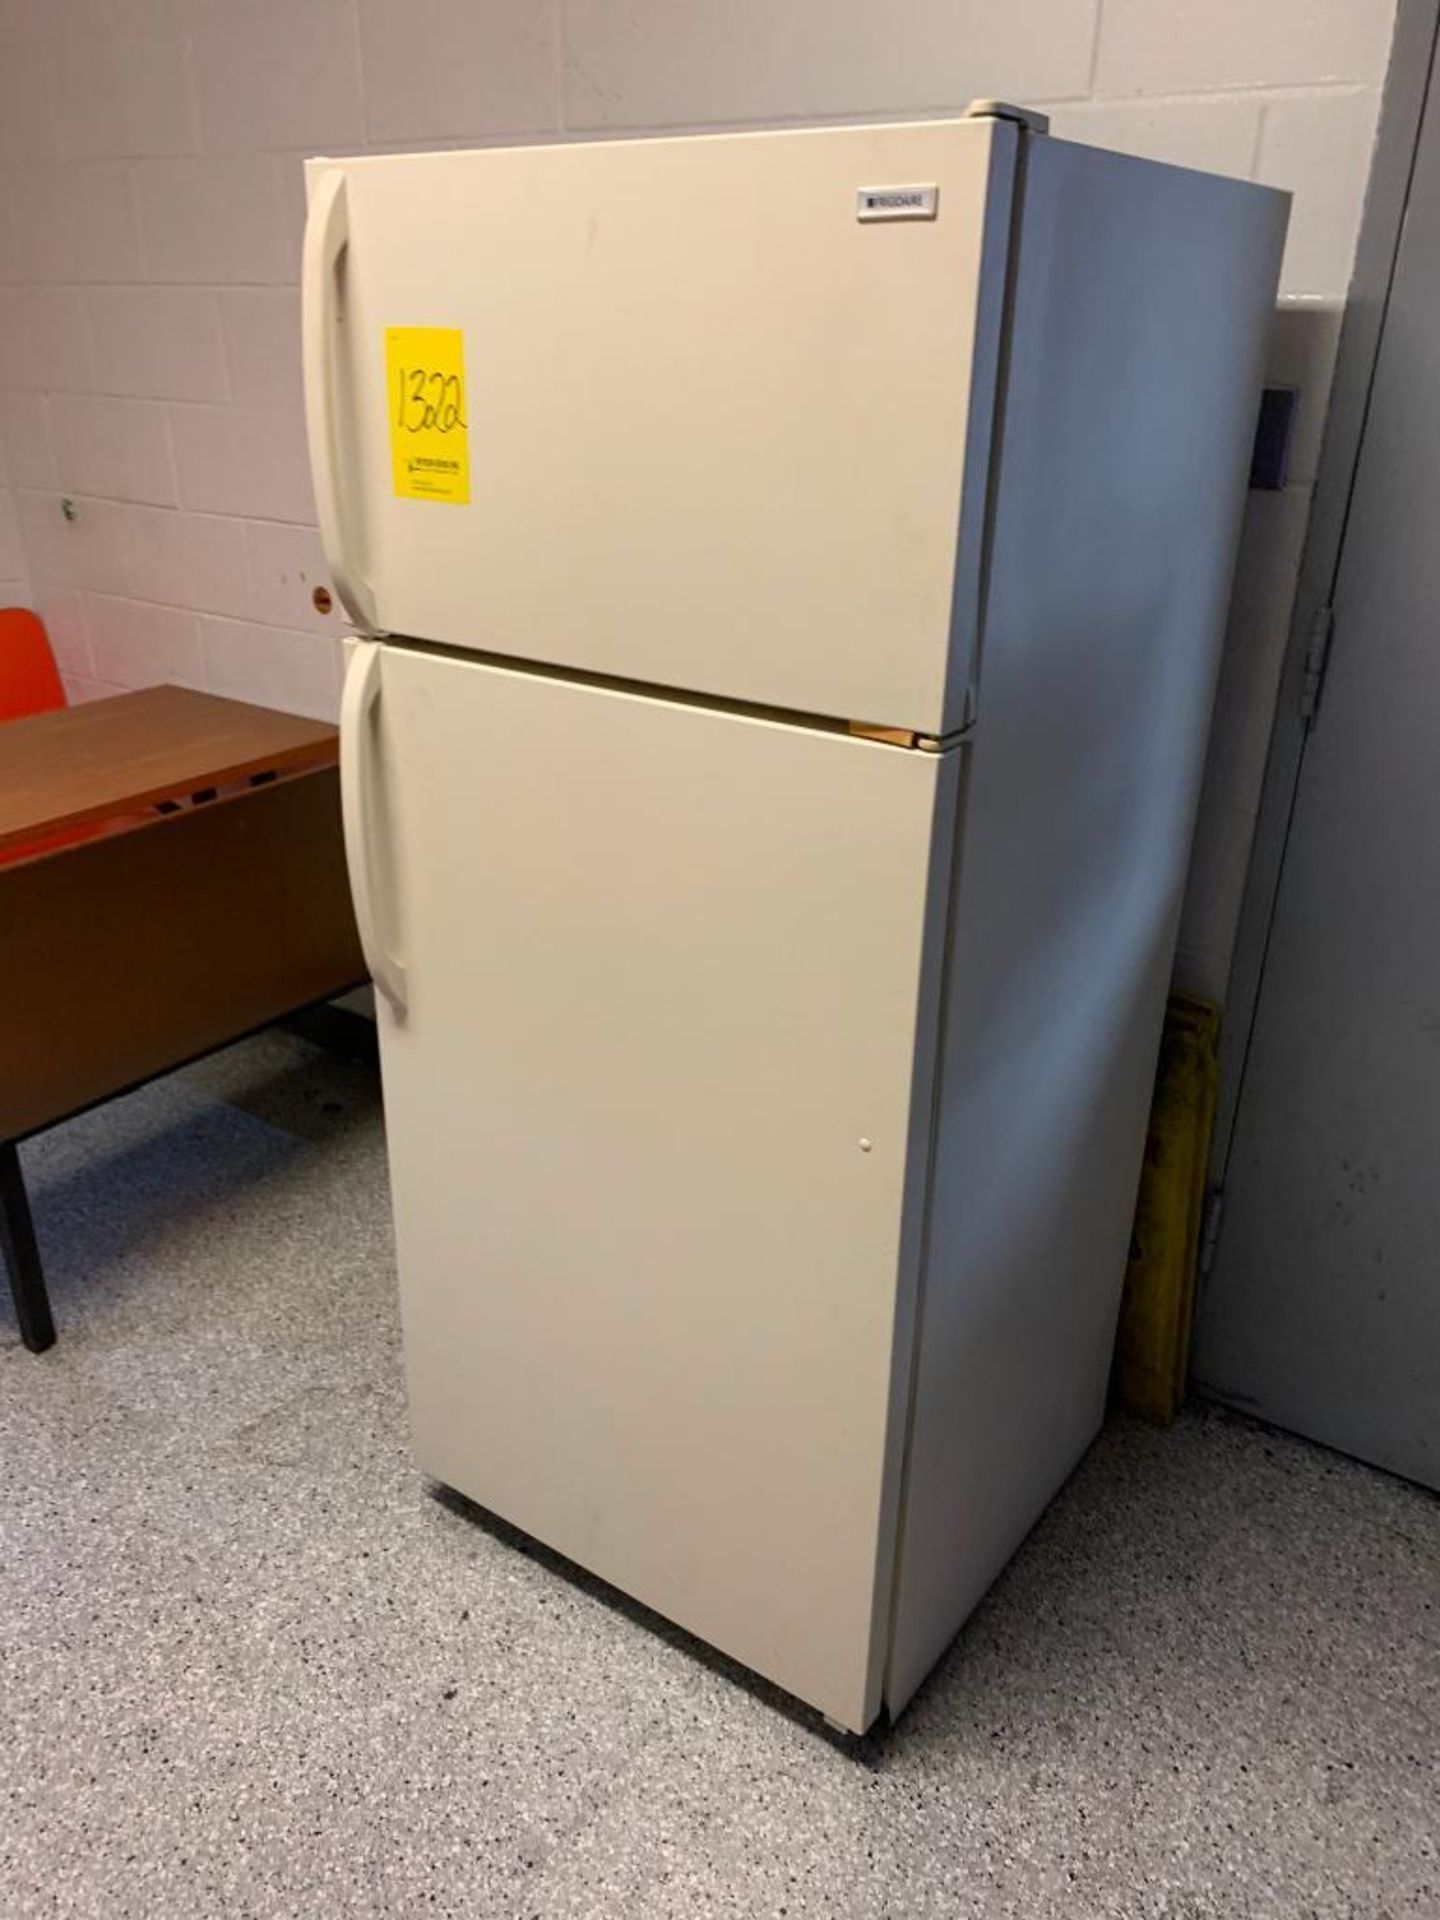 Contents of Break Area; (2) Microwaves, Refrigerator/Freezer (1st Floor) - Image 5 of 6